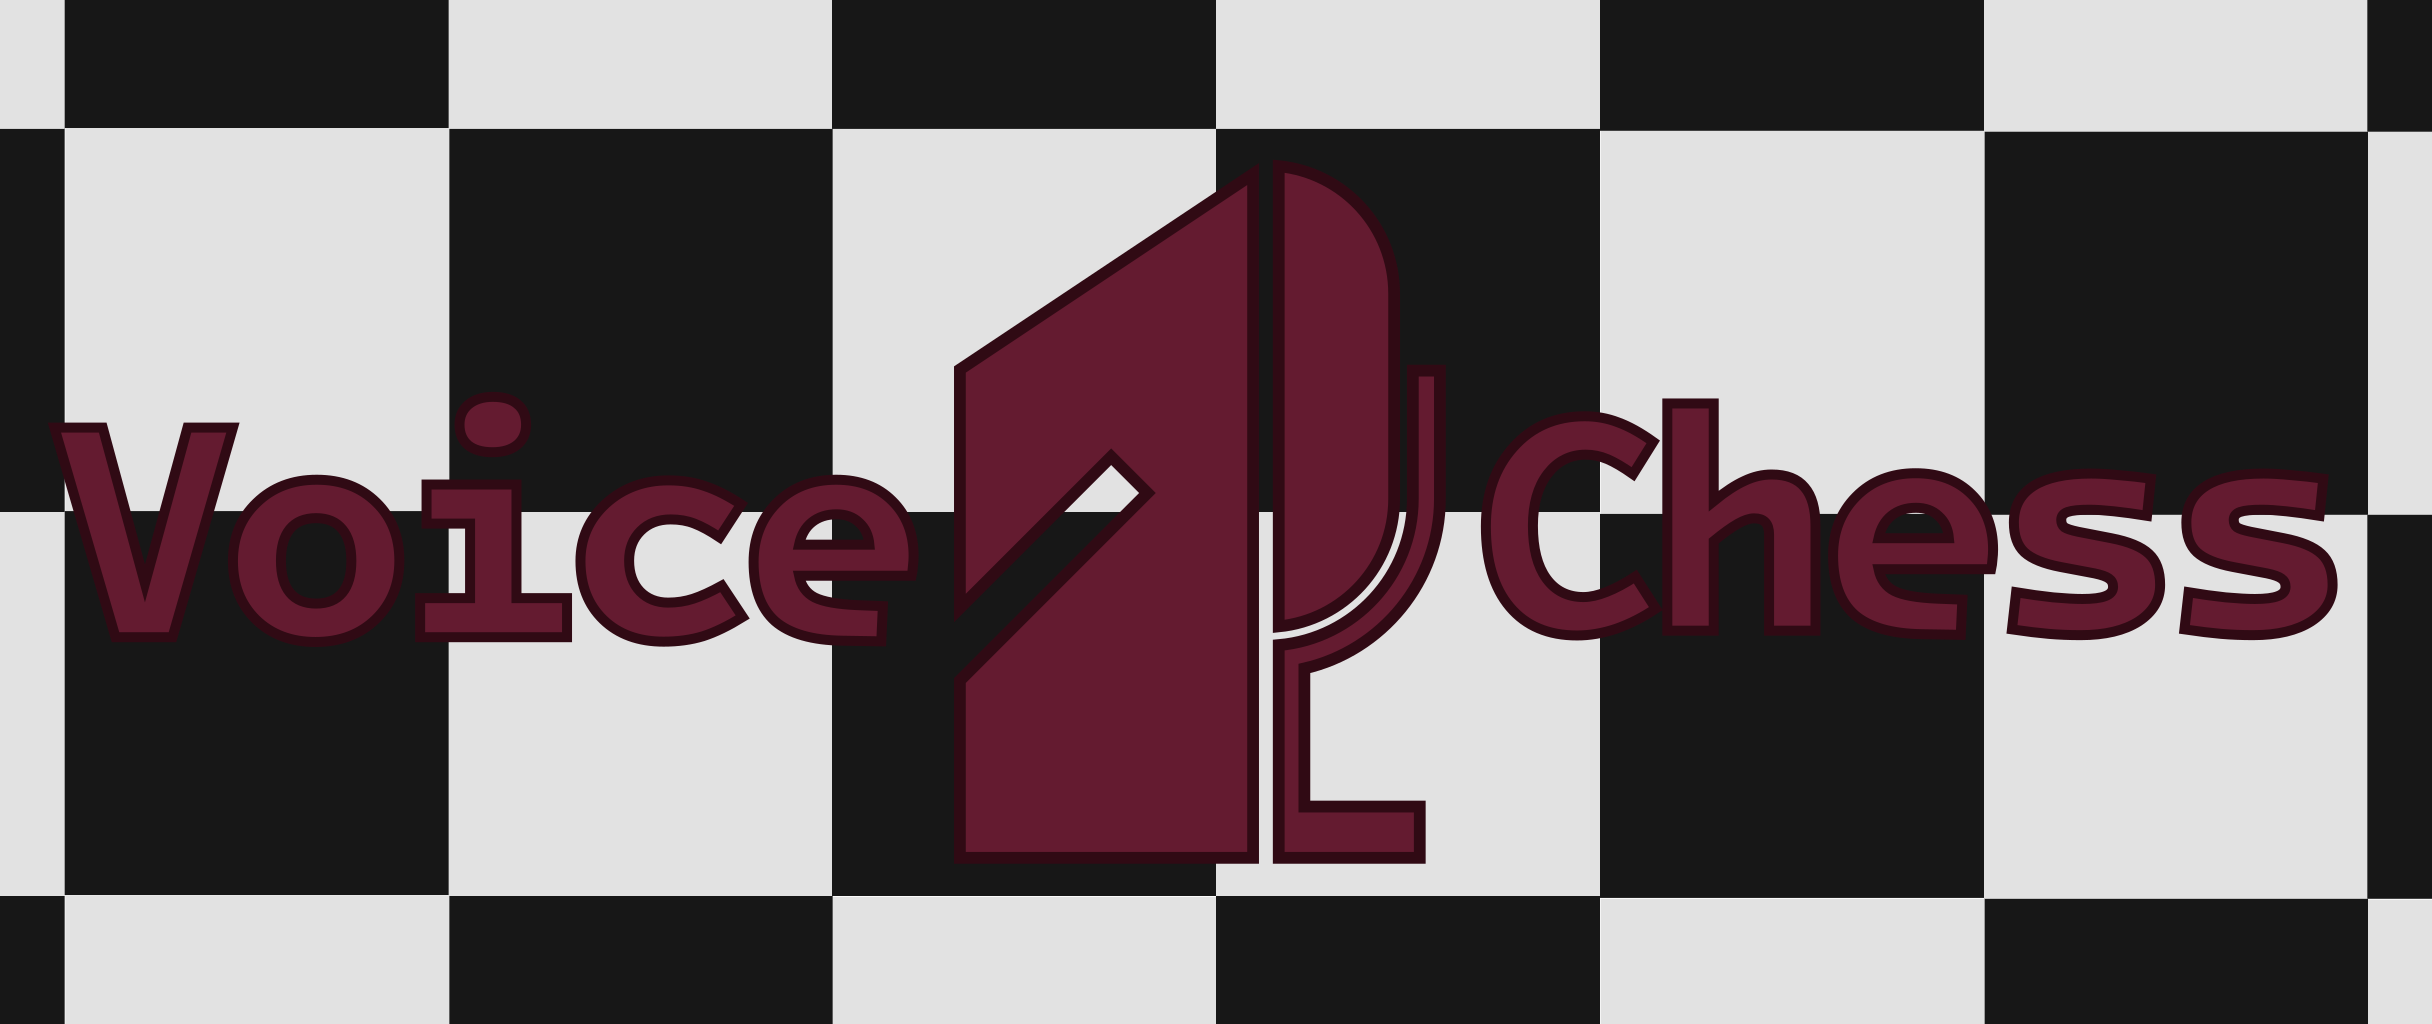 Voice Chess banner